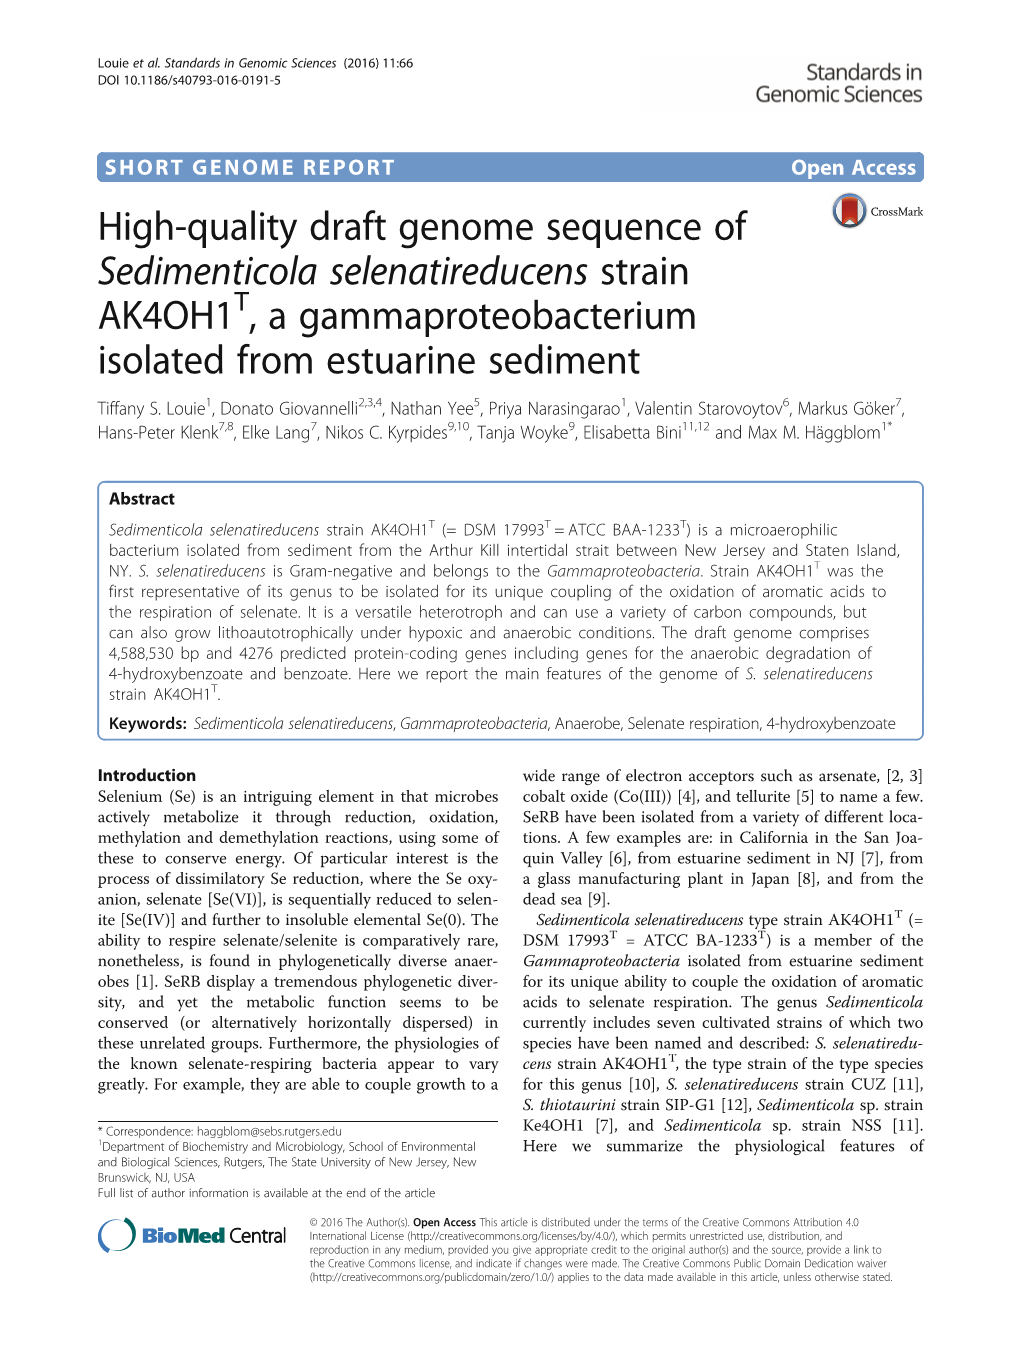 High-Quality Draft Genome Sequence of Sedimenticola Selenatireducens Strain AK4OH1T, a Gammaproteobacterium Isolated from Estuarine Sediment Tiffany S